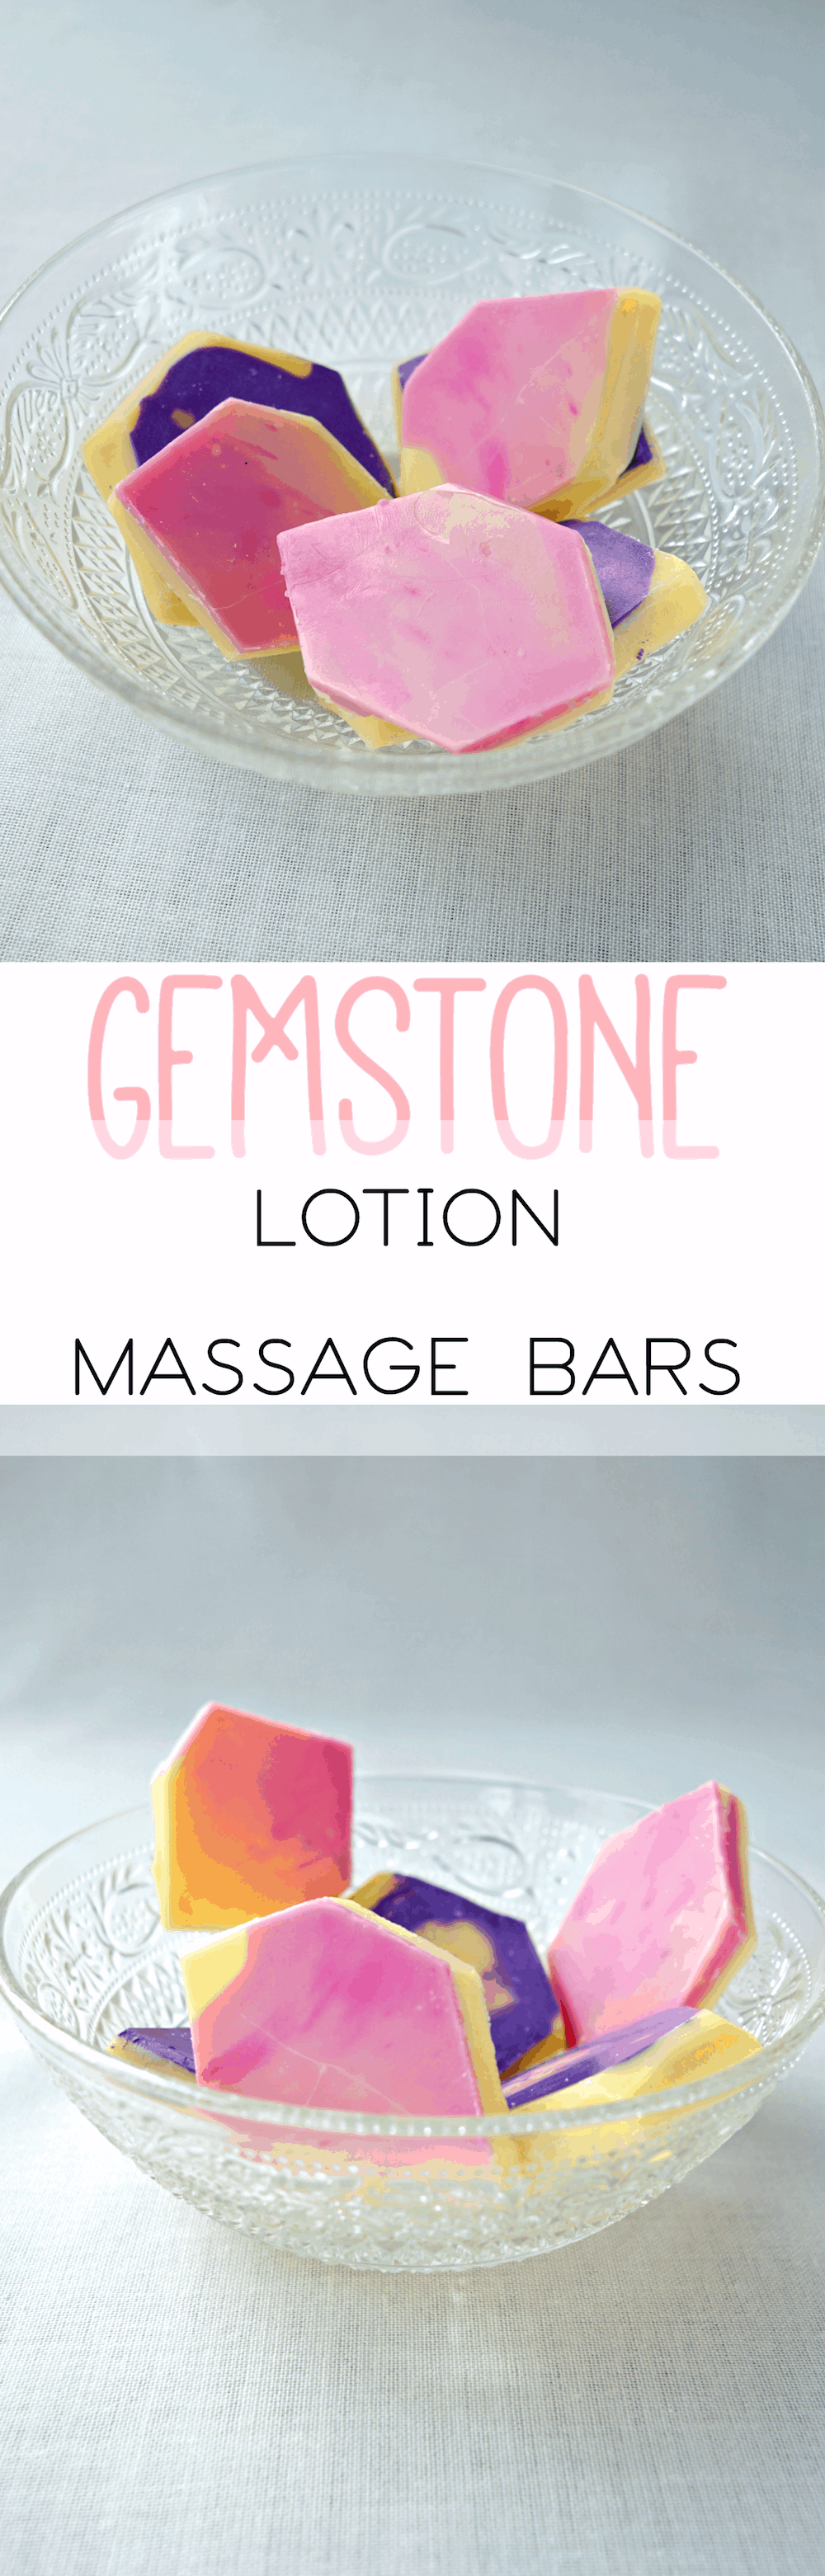 Diy gemstone lotion massage bars